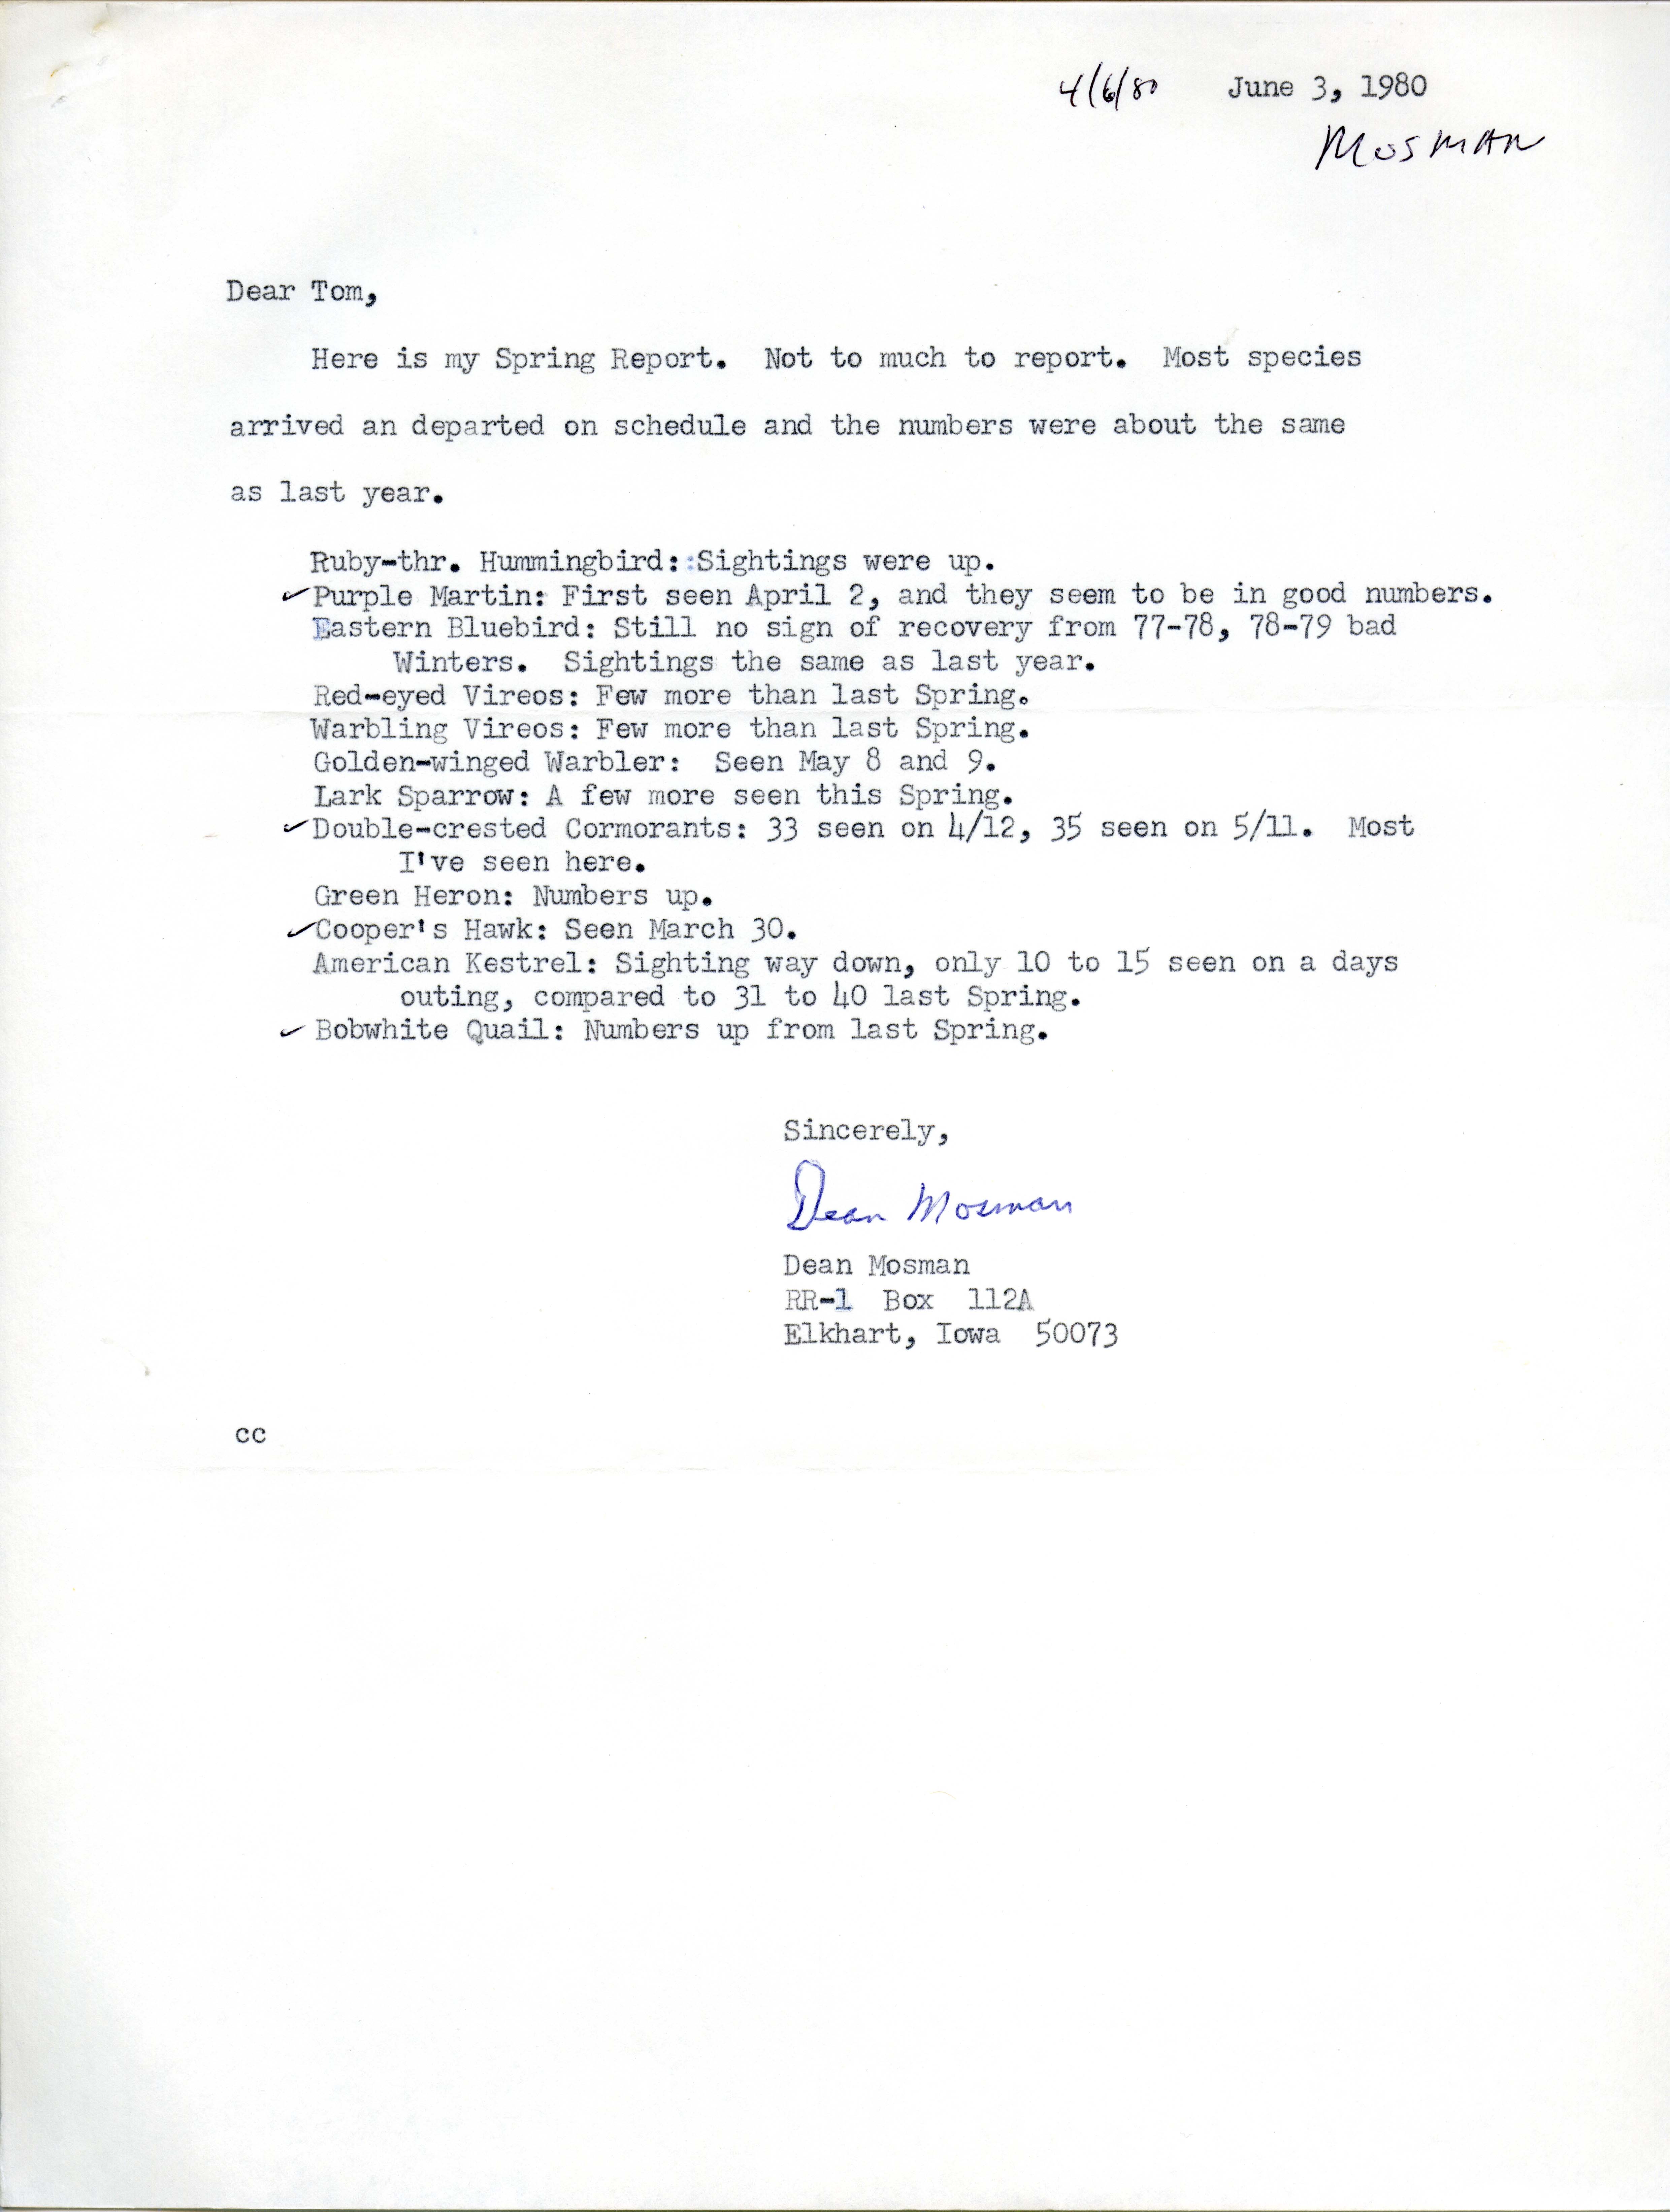 Dean Mosman letter to Thomas H. Kent regarding bird sightings, June 3, 1980